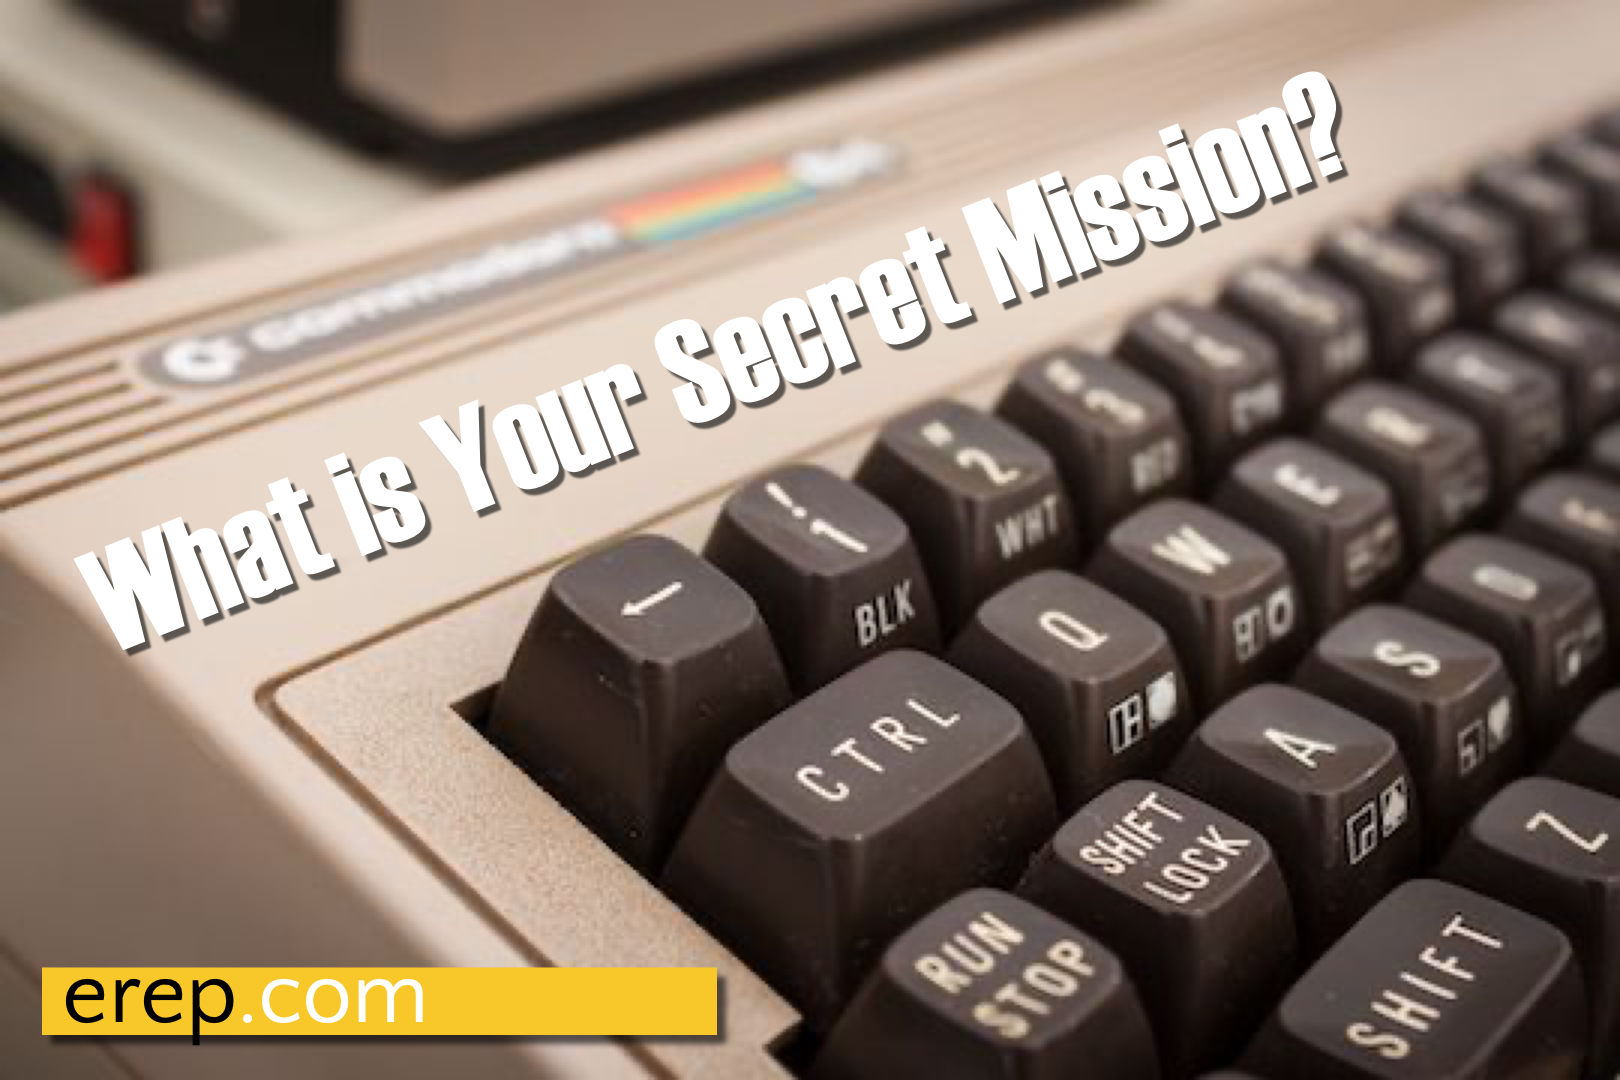 What is Your Secret Mission?